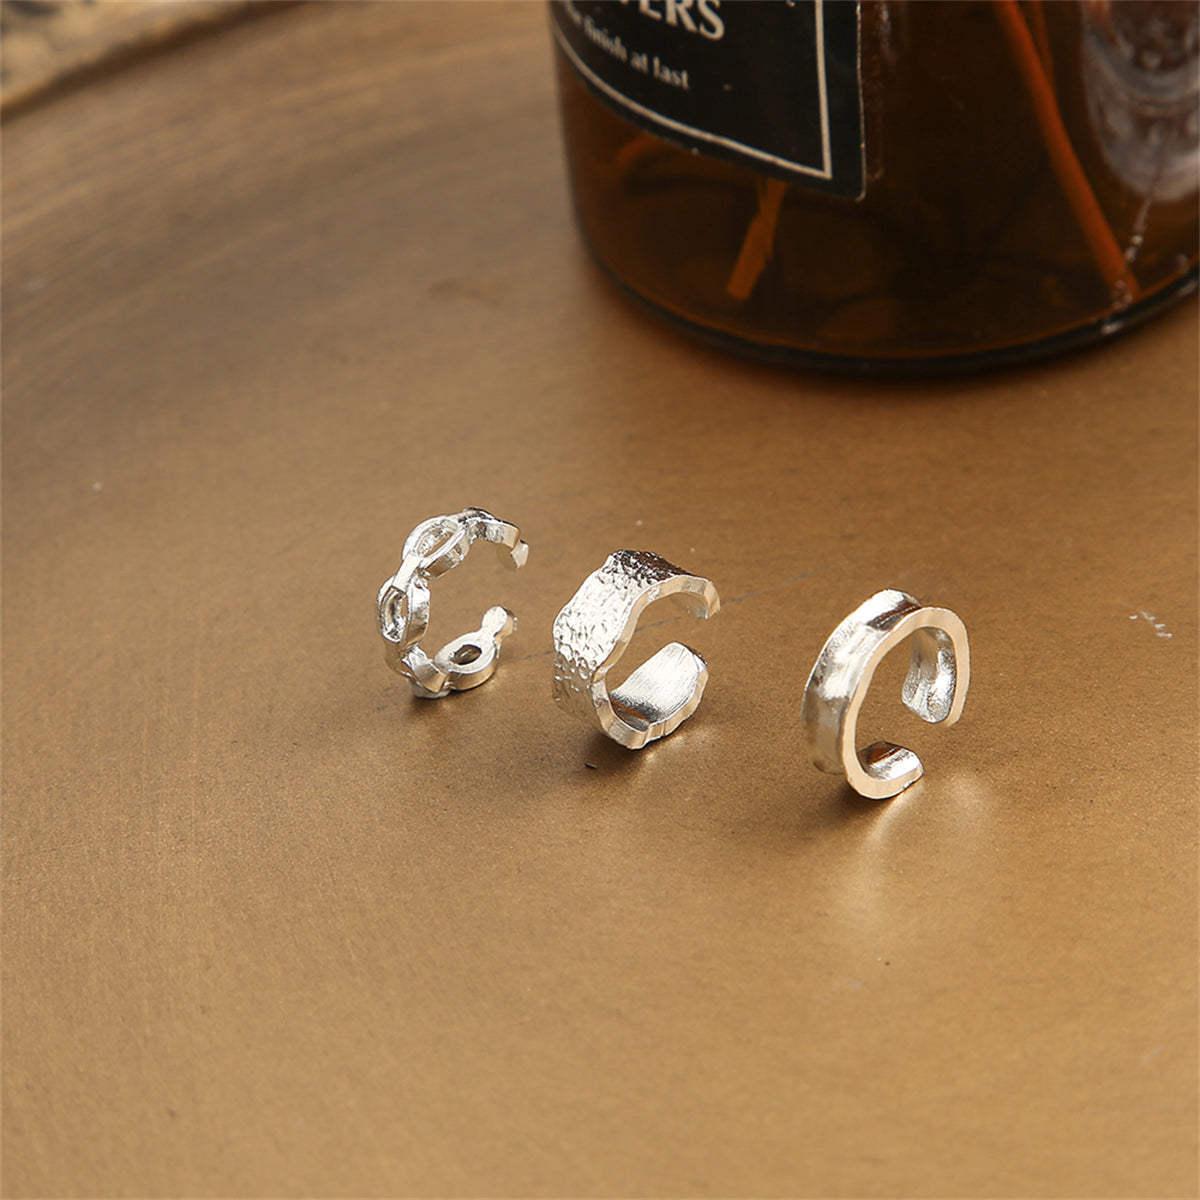 Silver-Plated Chain Link Ear Cuffs Set